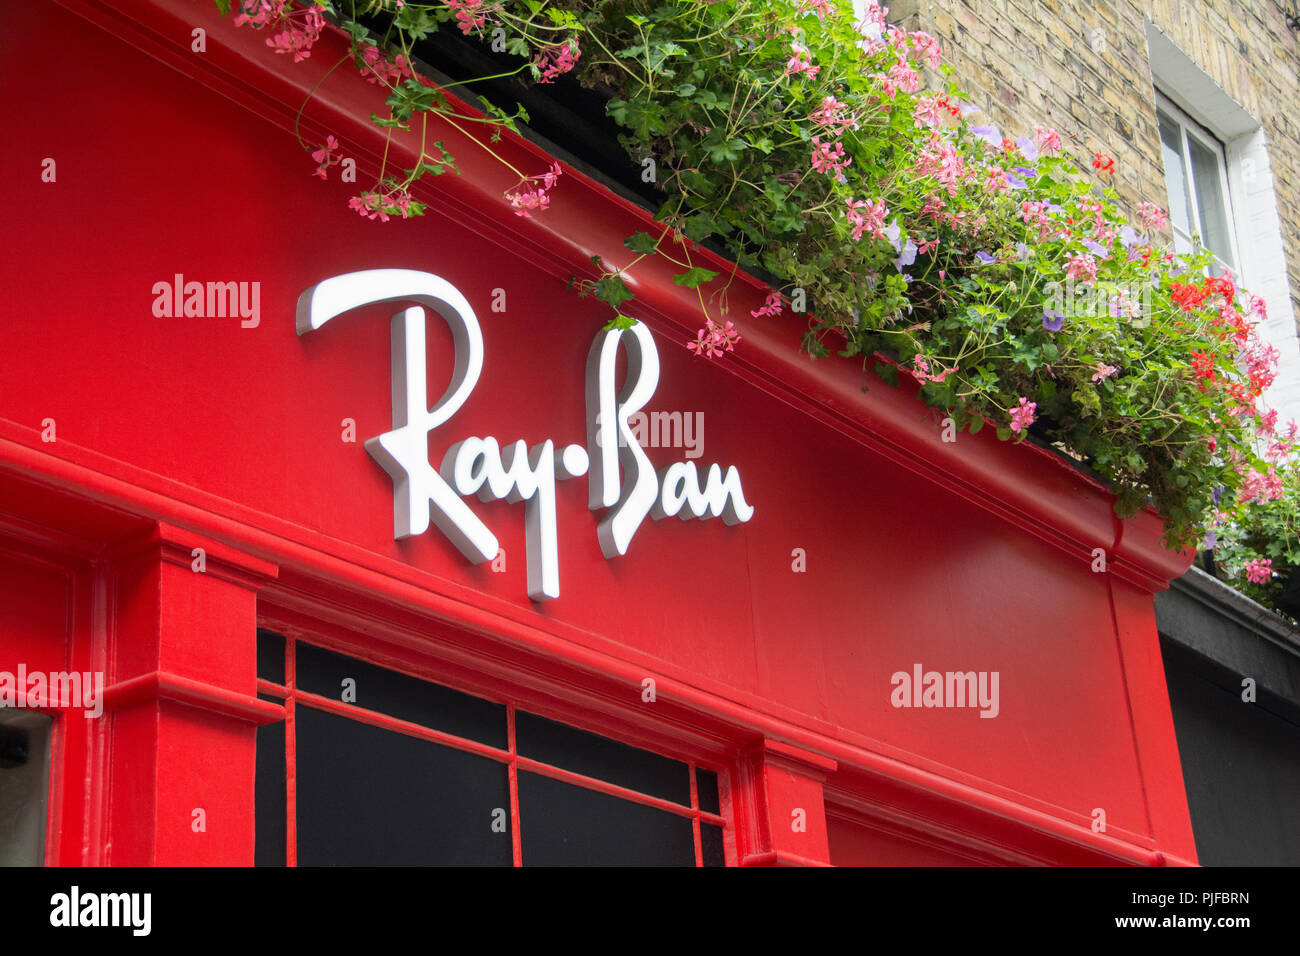 ray ban store uk